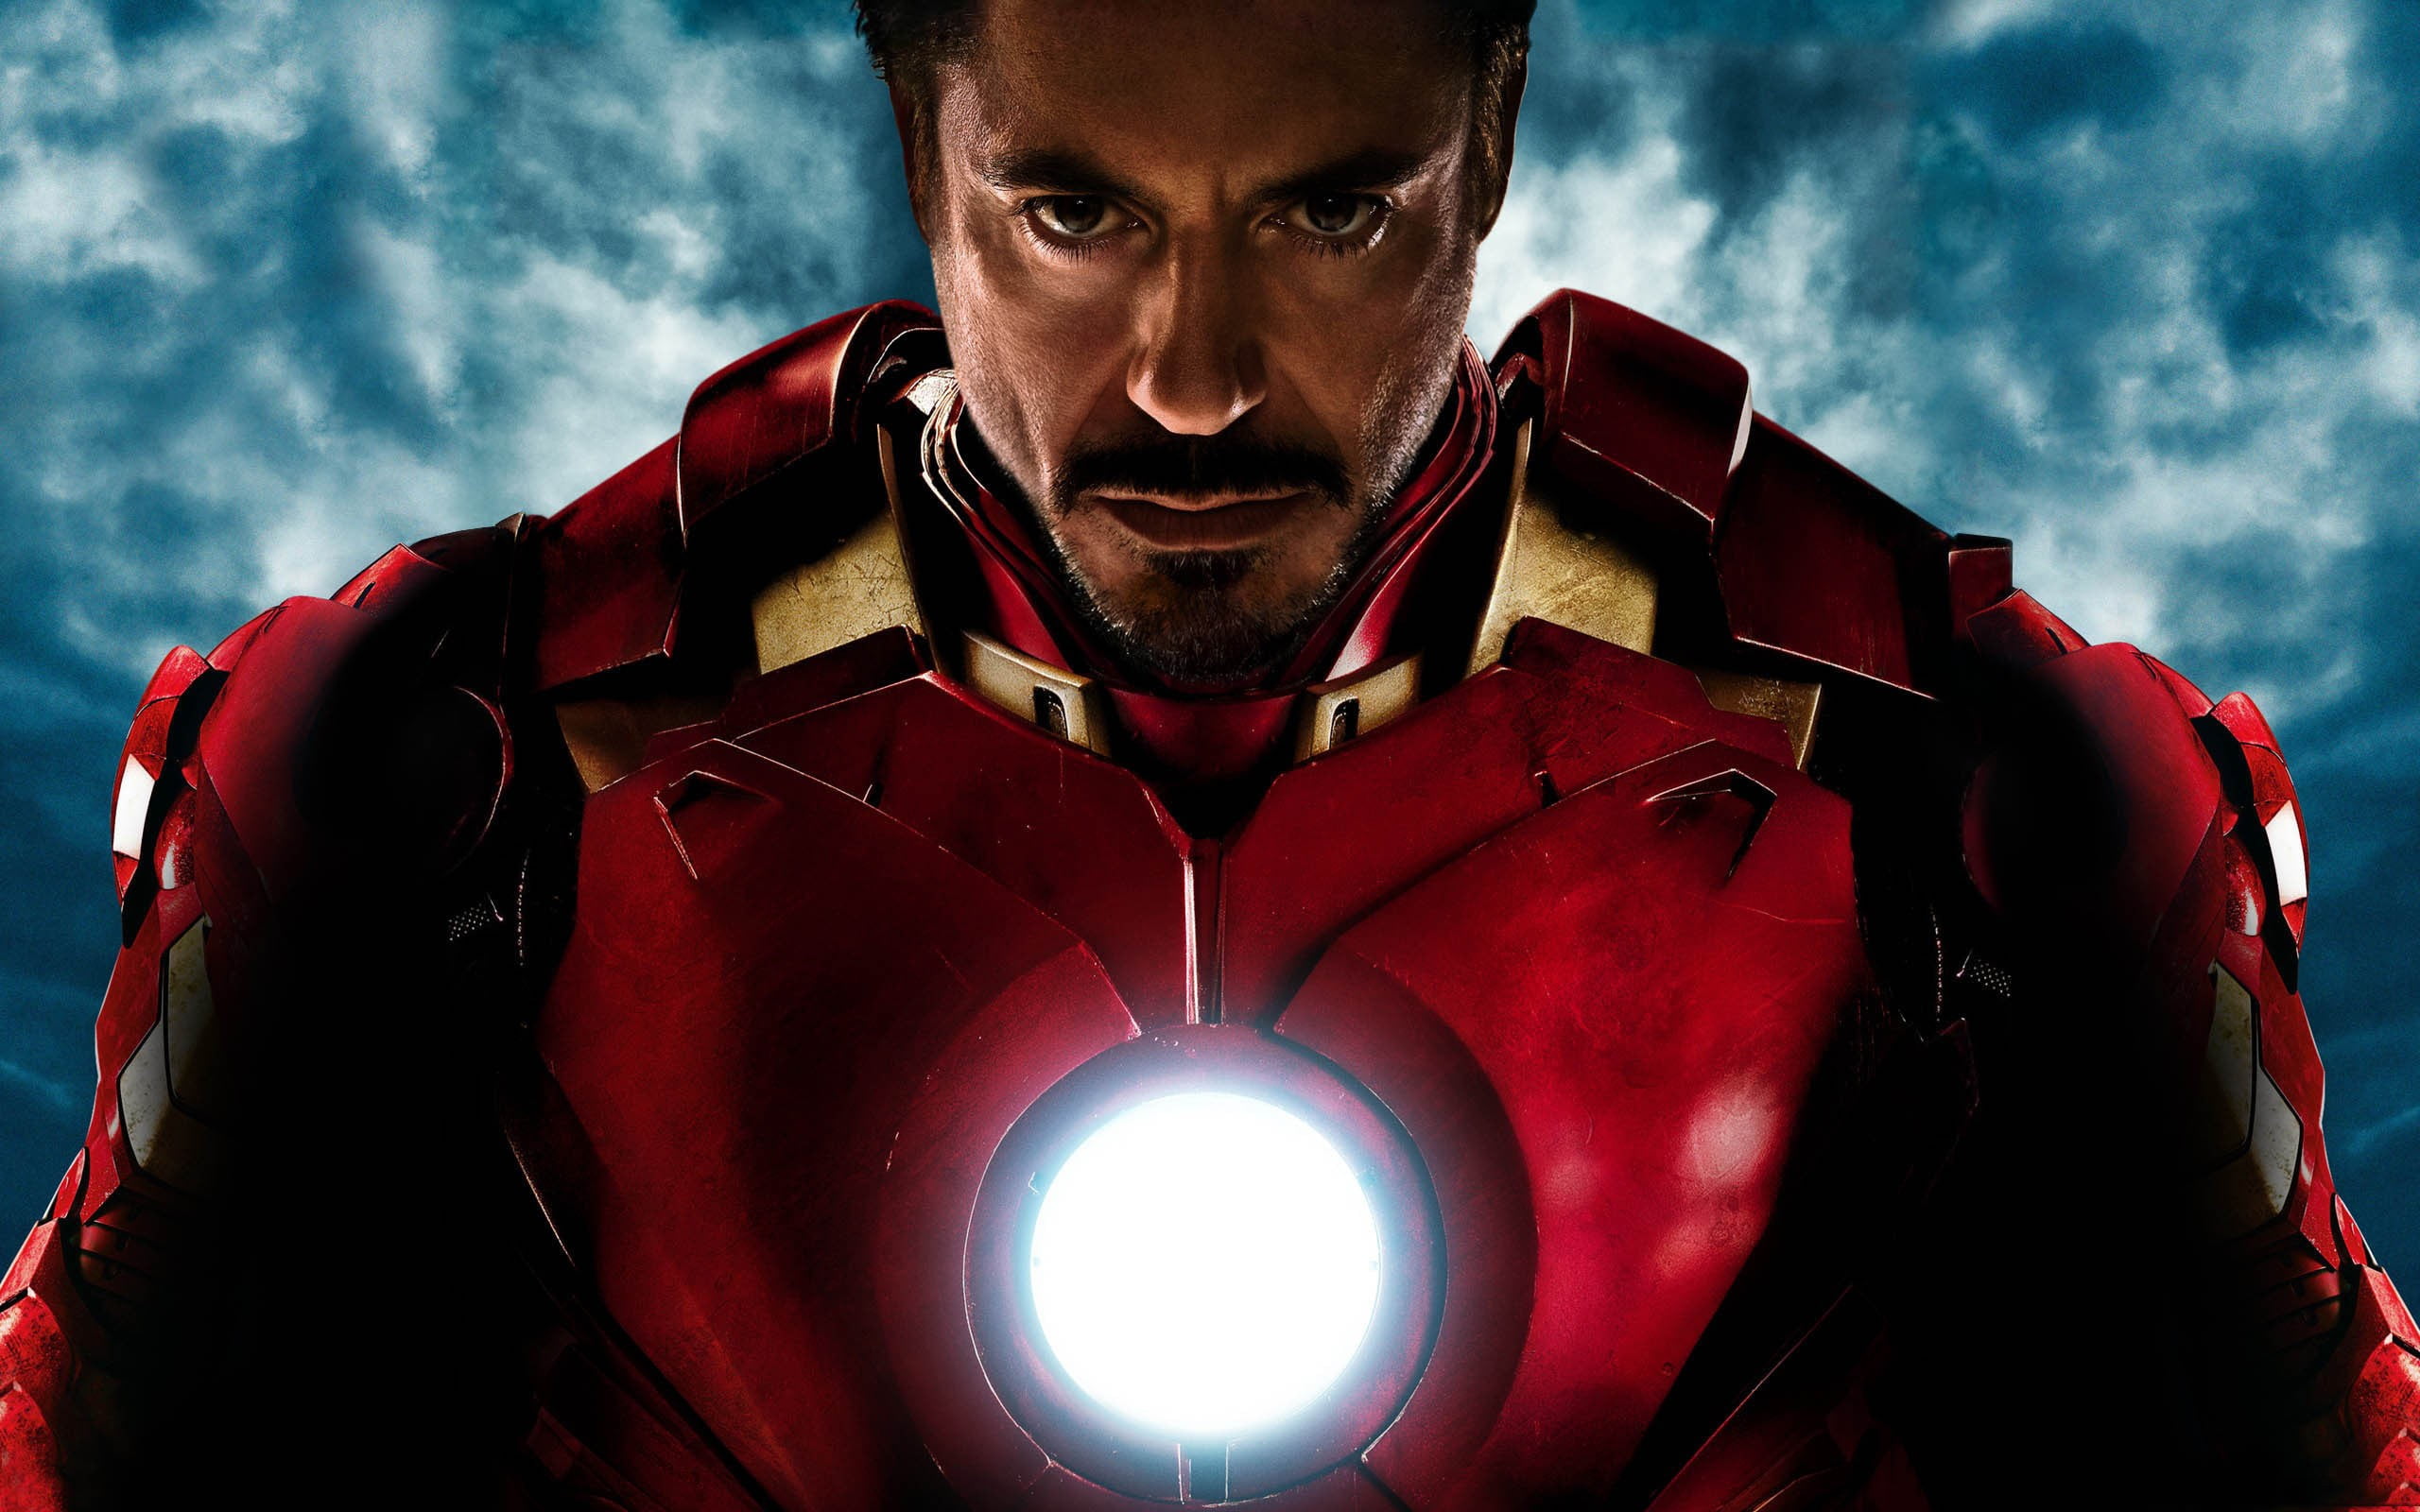 red and black golf bag, Iron Man, Robert Downey Jr., Tony Stark, The Avengers